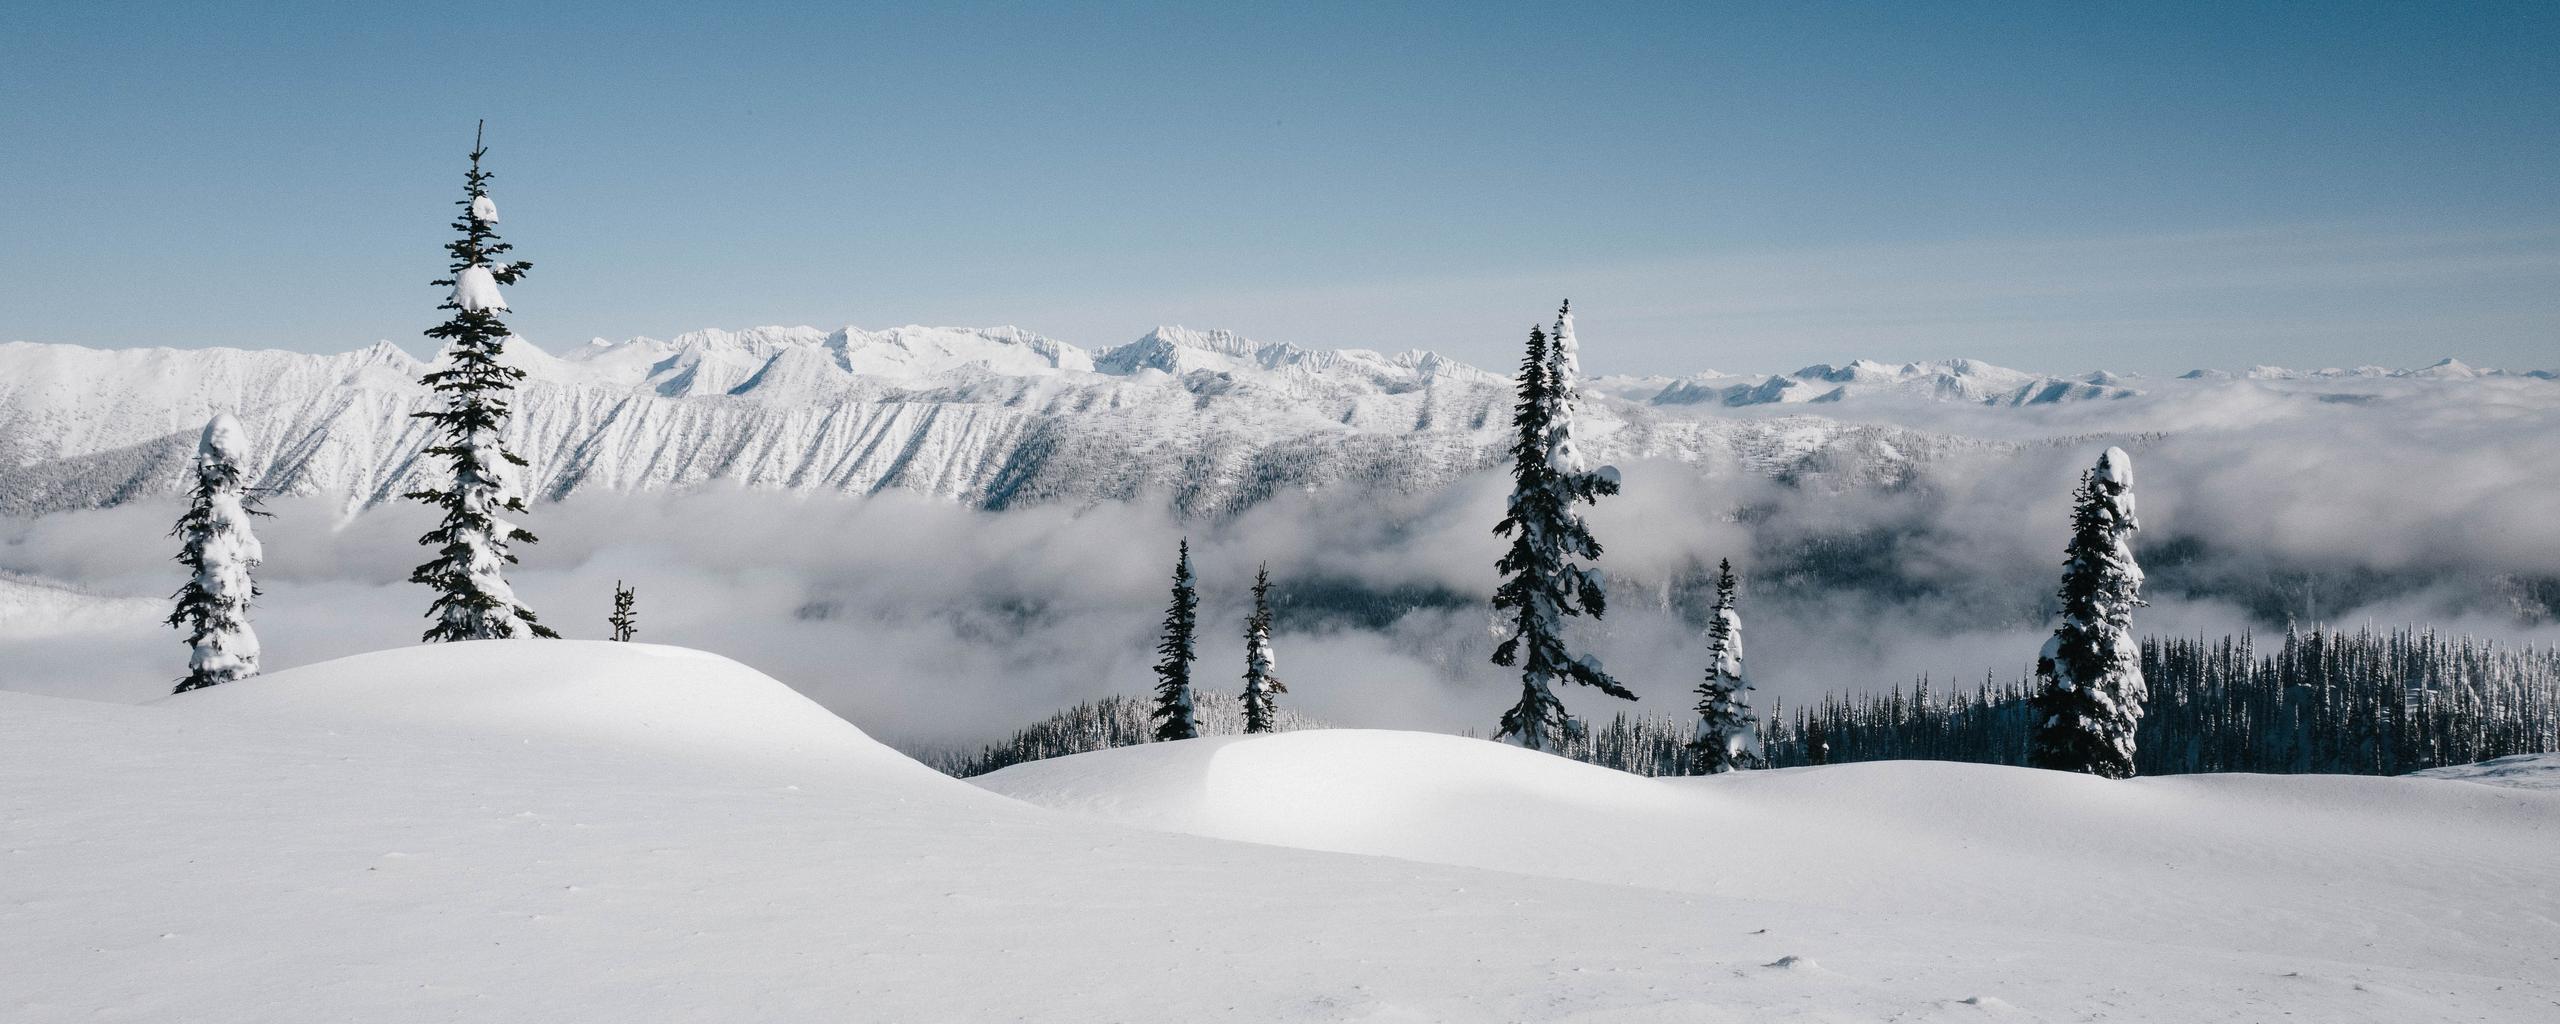 Snowy landscape of British Columbia